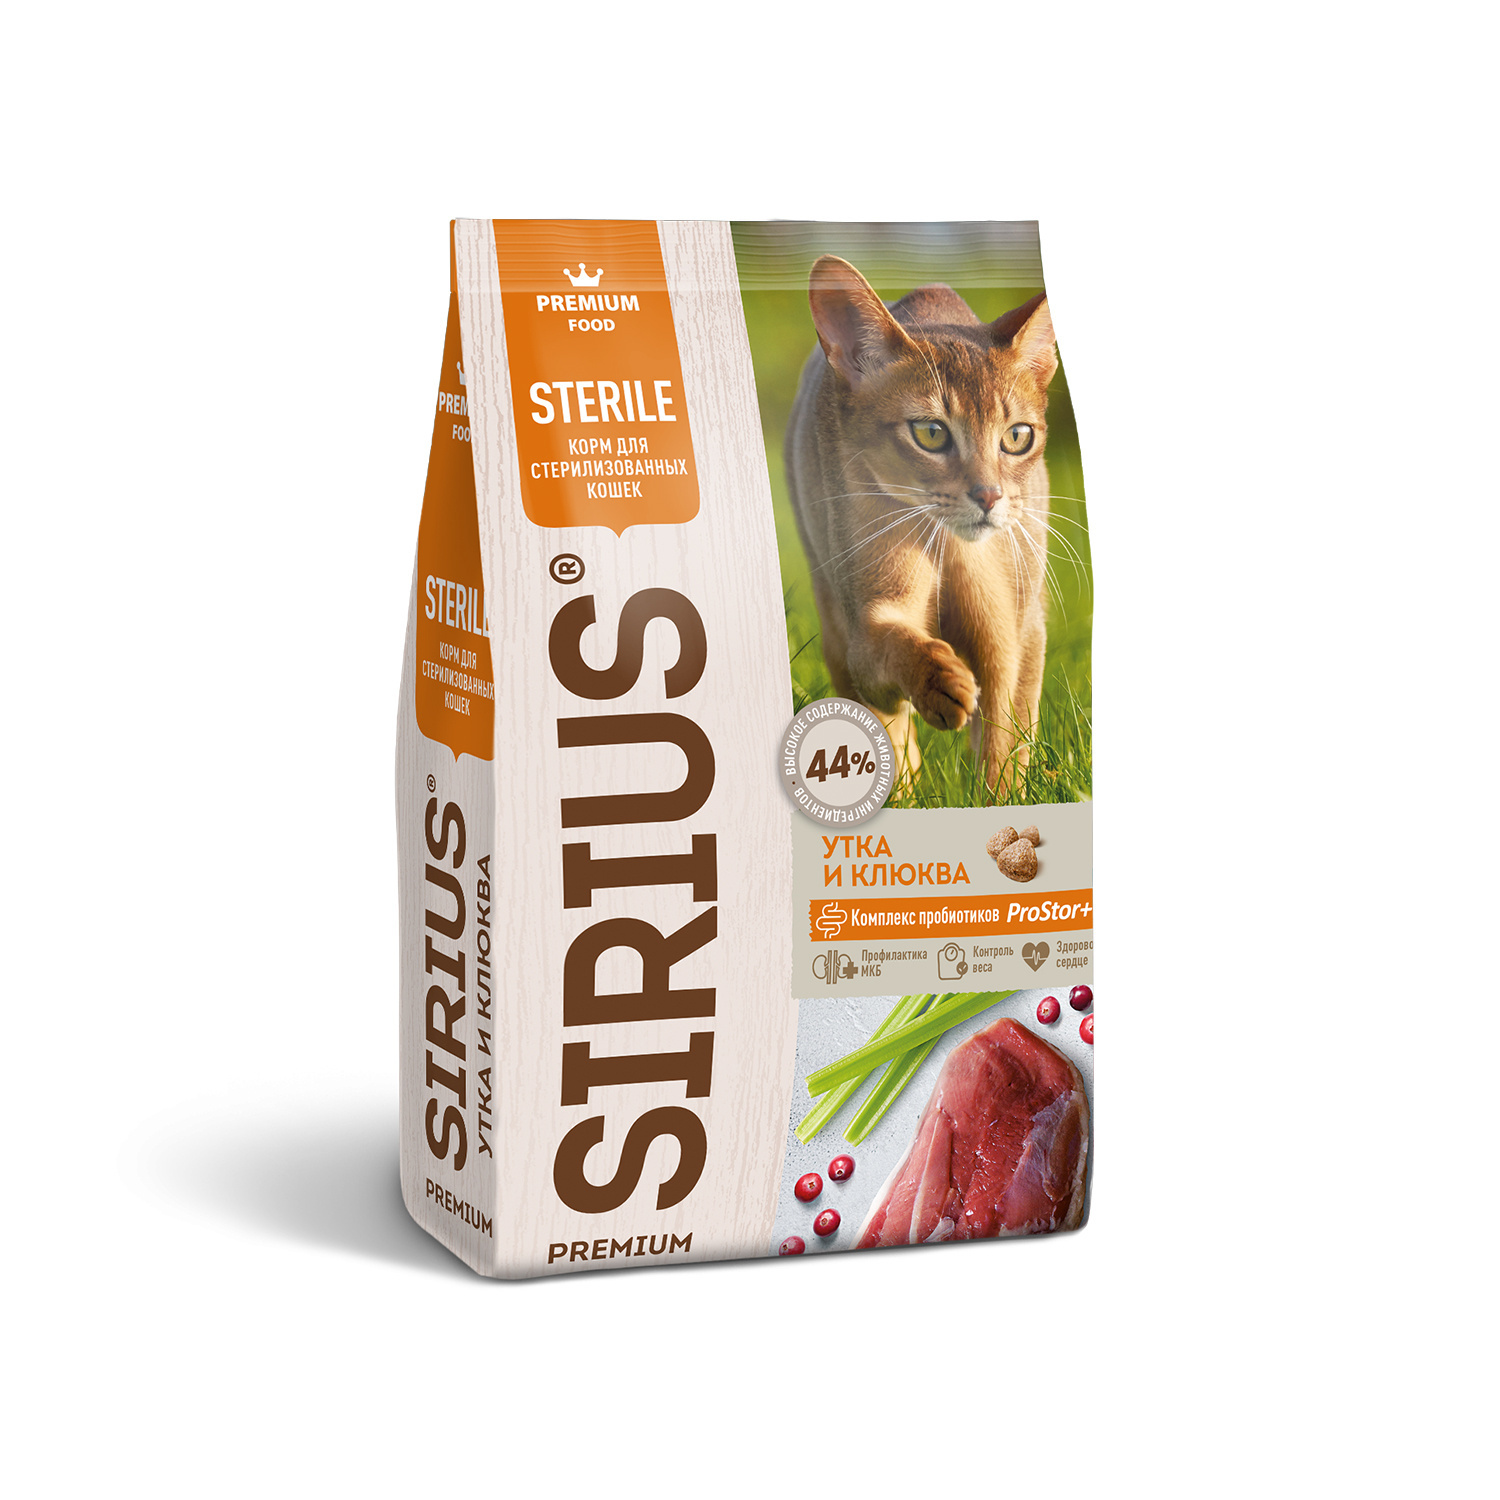 Sirius Sirius сухой корм для стерилизованных кошек, утка и клюква (10 кг) sirius sirius сухой корм для стерилизованных кошек индейка и курица 1 5 кг